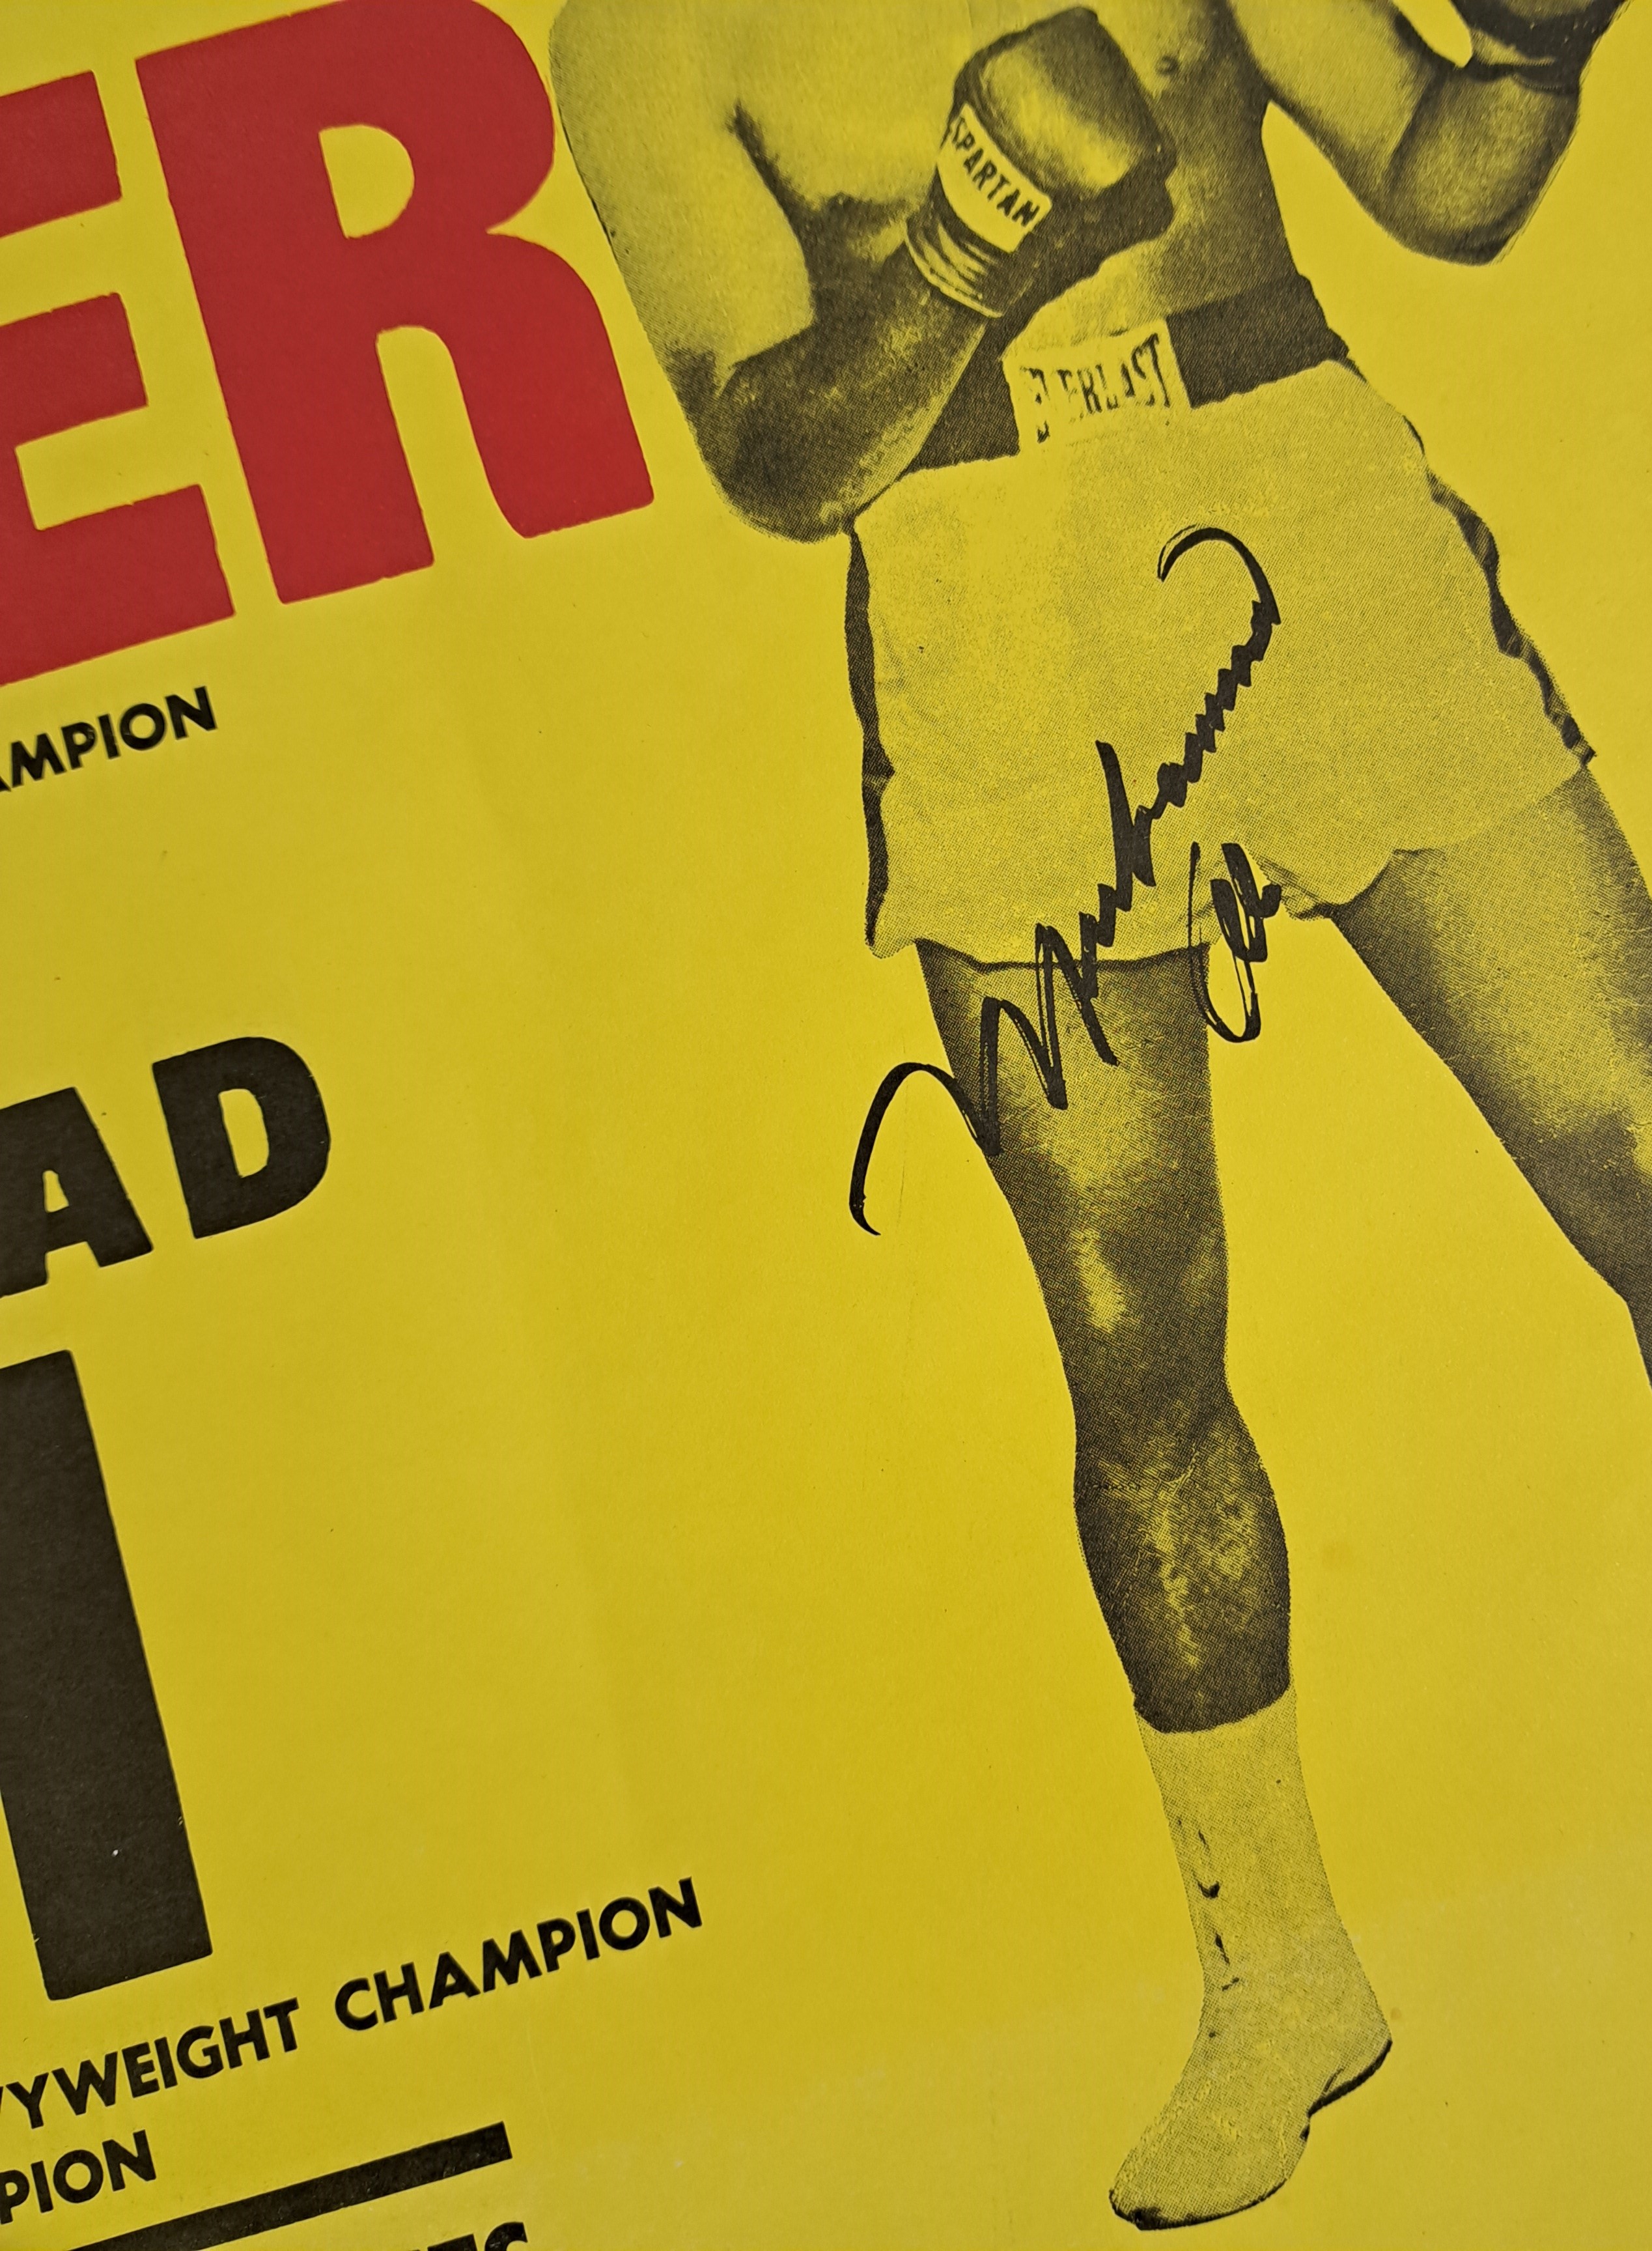 Boxing Memorabilia, a printed Poster depicting "Joe Frazier" and "Muhammad Ali" - Image 3 of 3